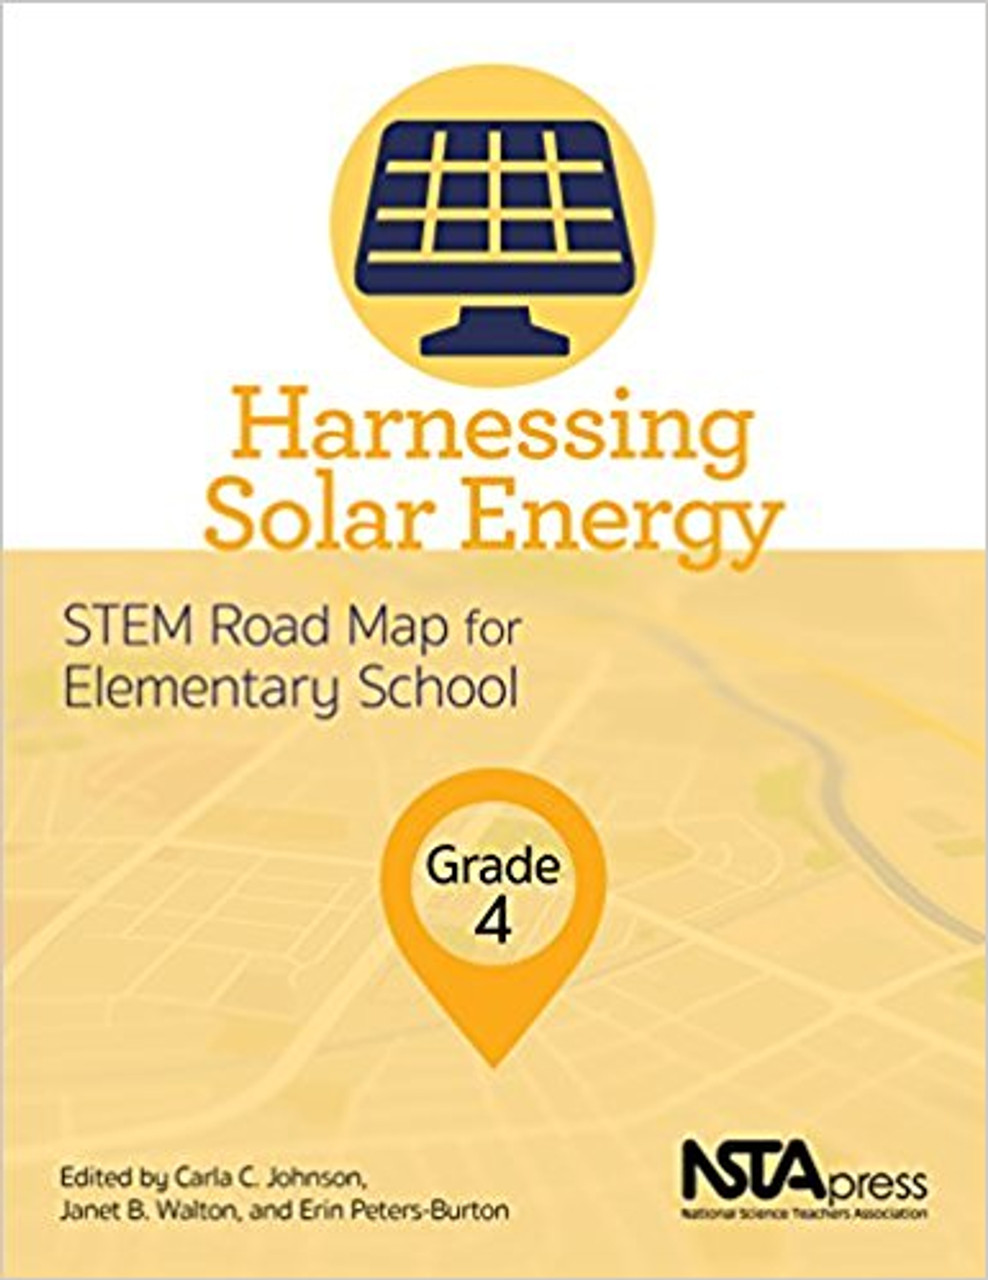 Harnessing Solar Energy, Grade 4: STEM Road Map for Elementary School by Carla C Johnson